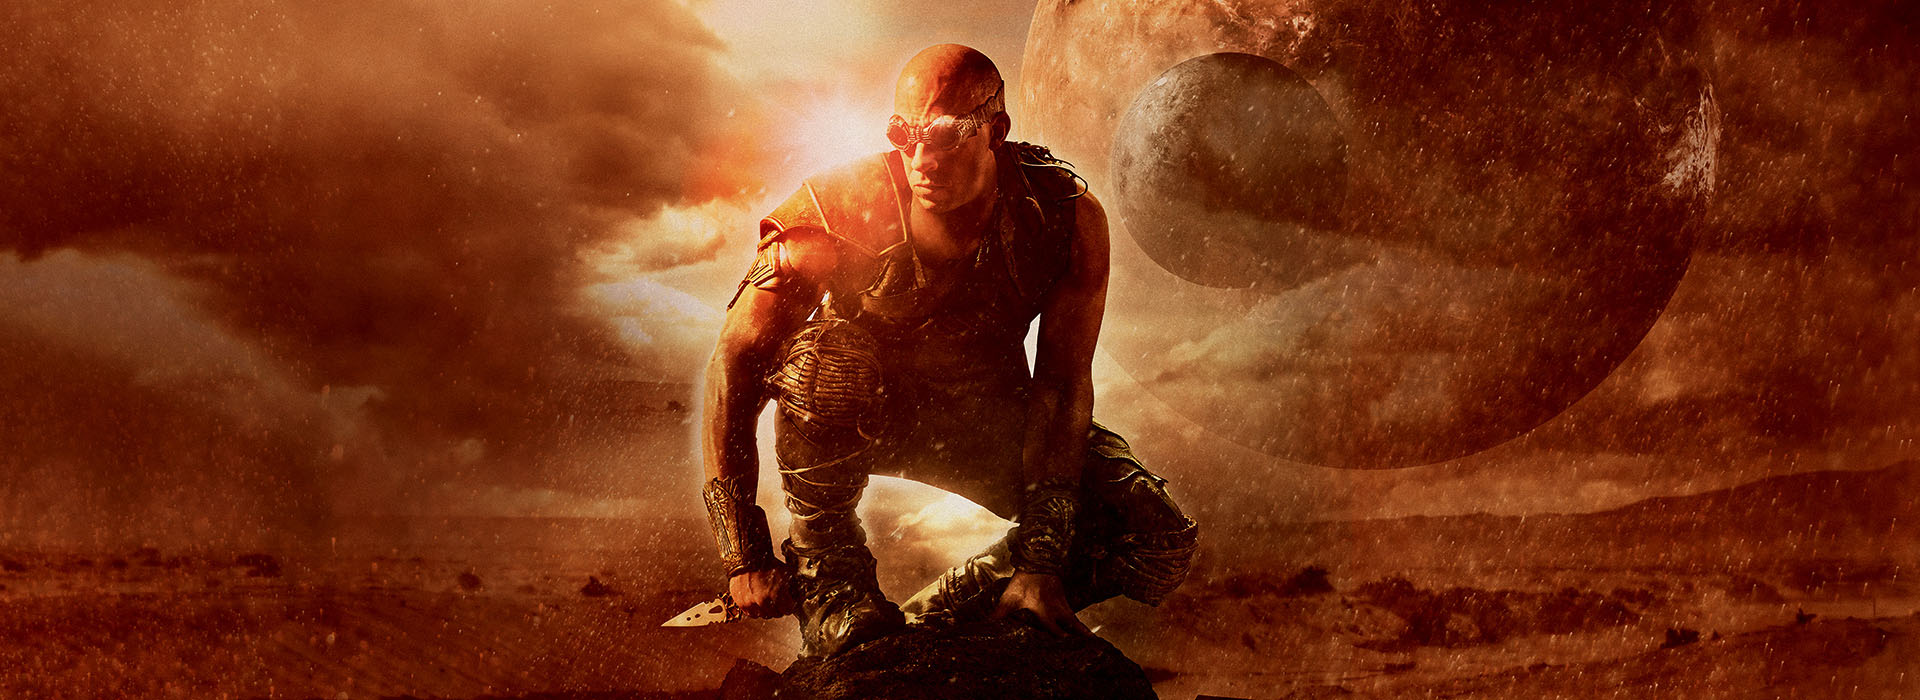 Movie poster Riddick